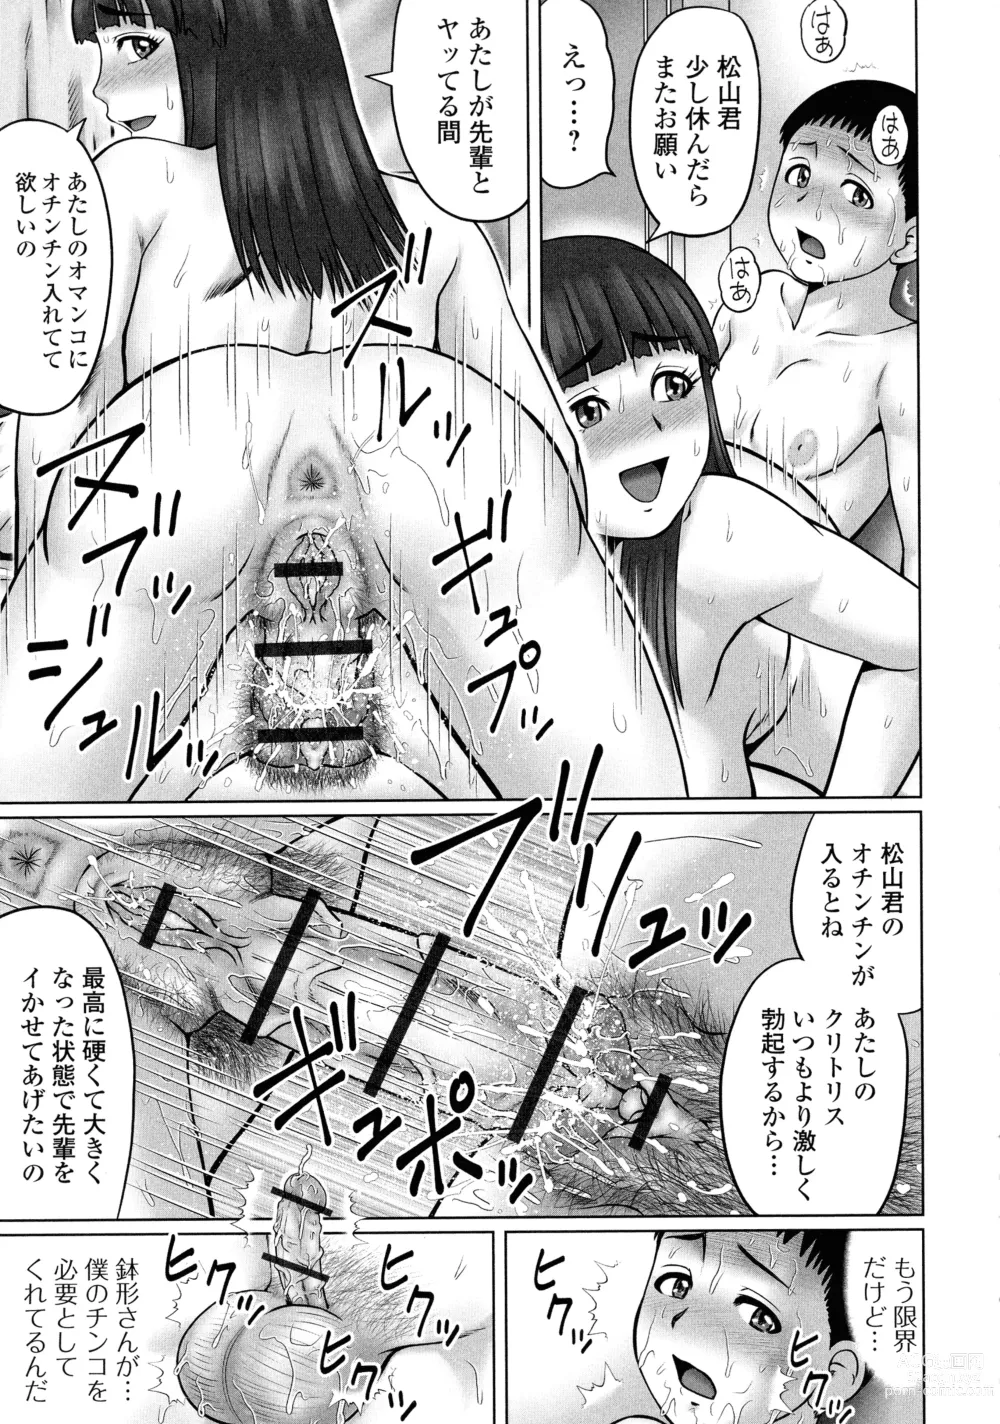 Page 190 of manga Doutei Z Sedai - Doutei Z Generation